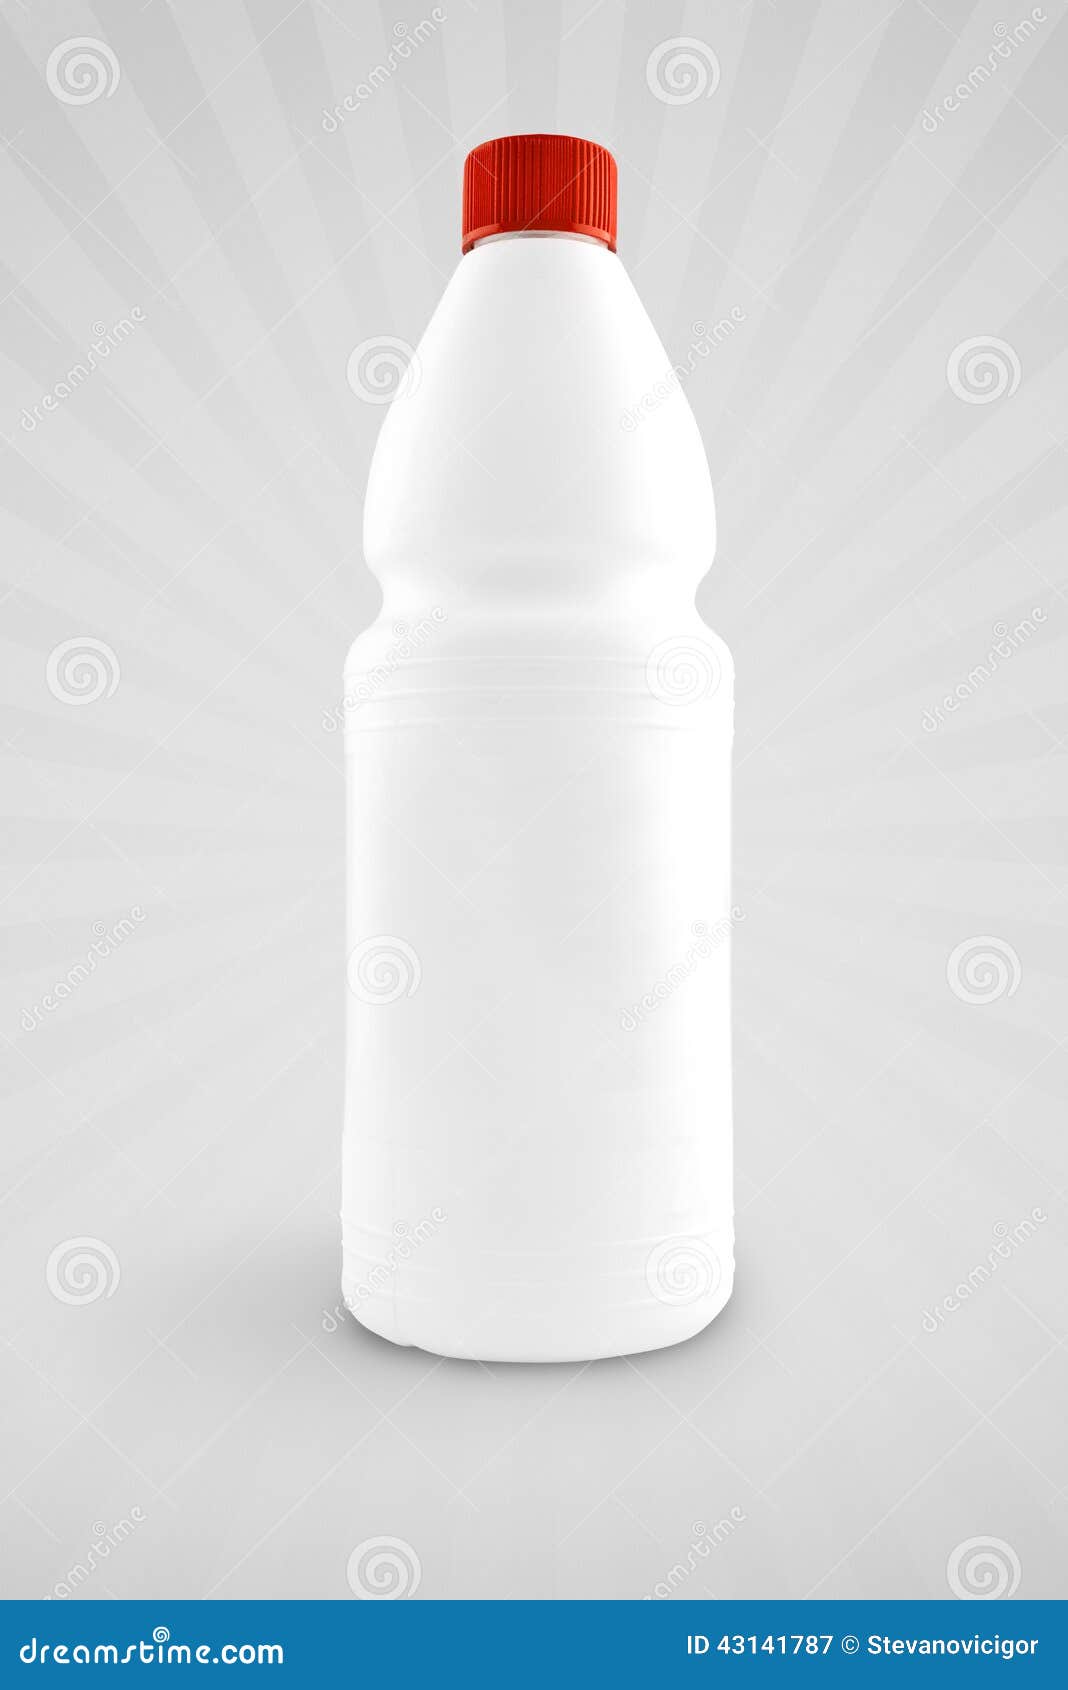 https://thumbs.dreamstime.com/z/unlabeled-plastic-bottle-chemical-liquid-gray-background-43141787.jpg